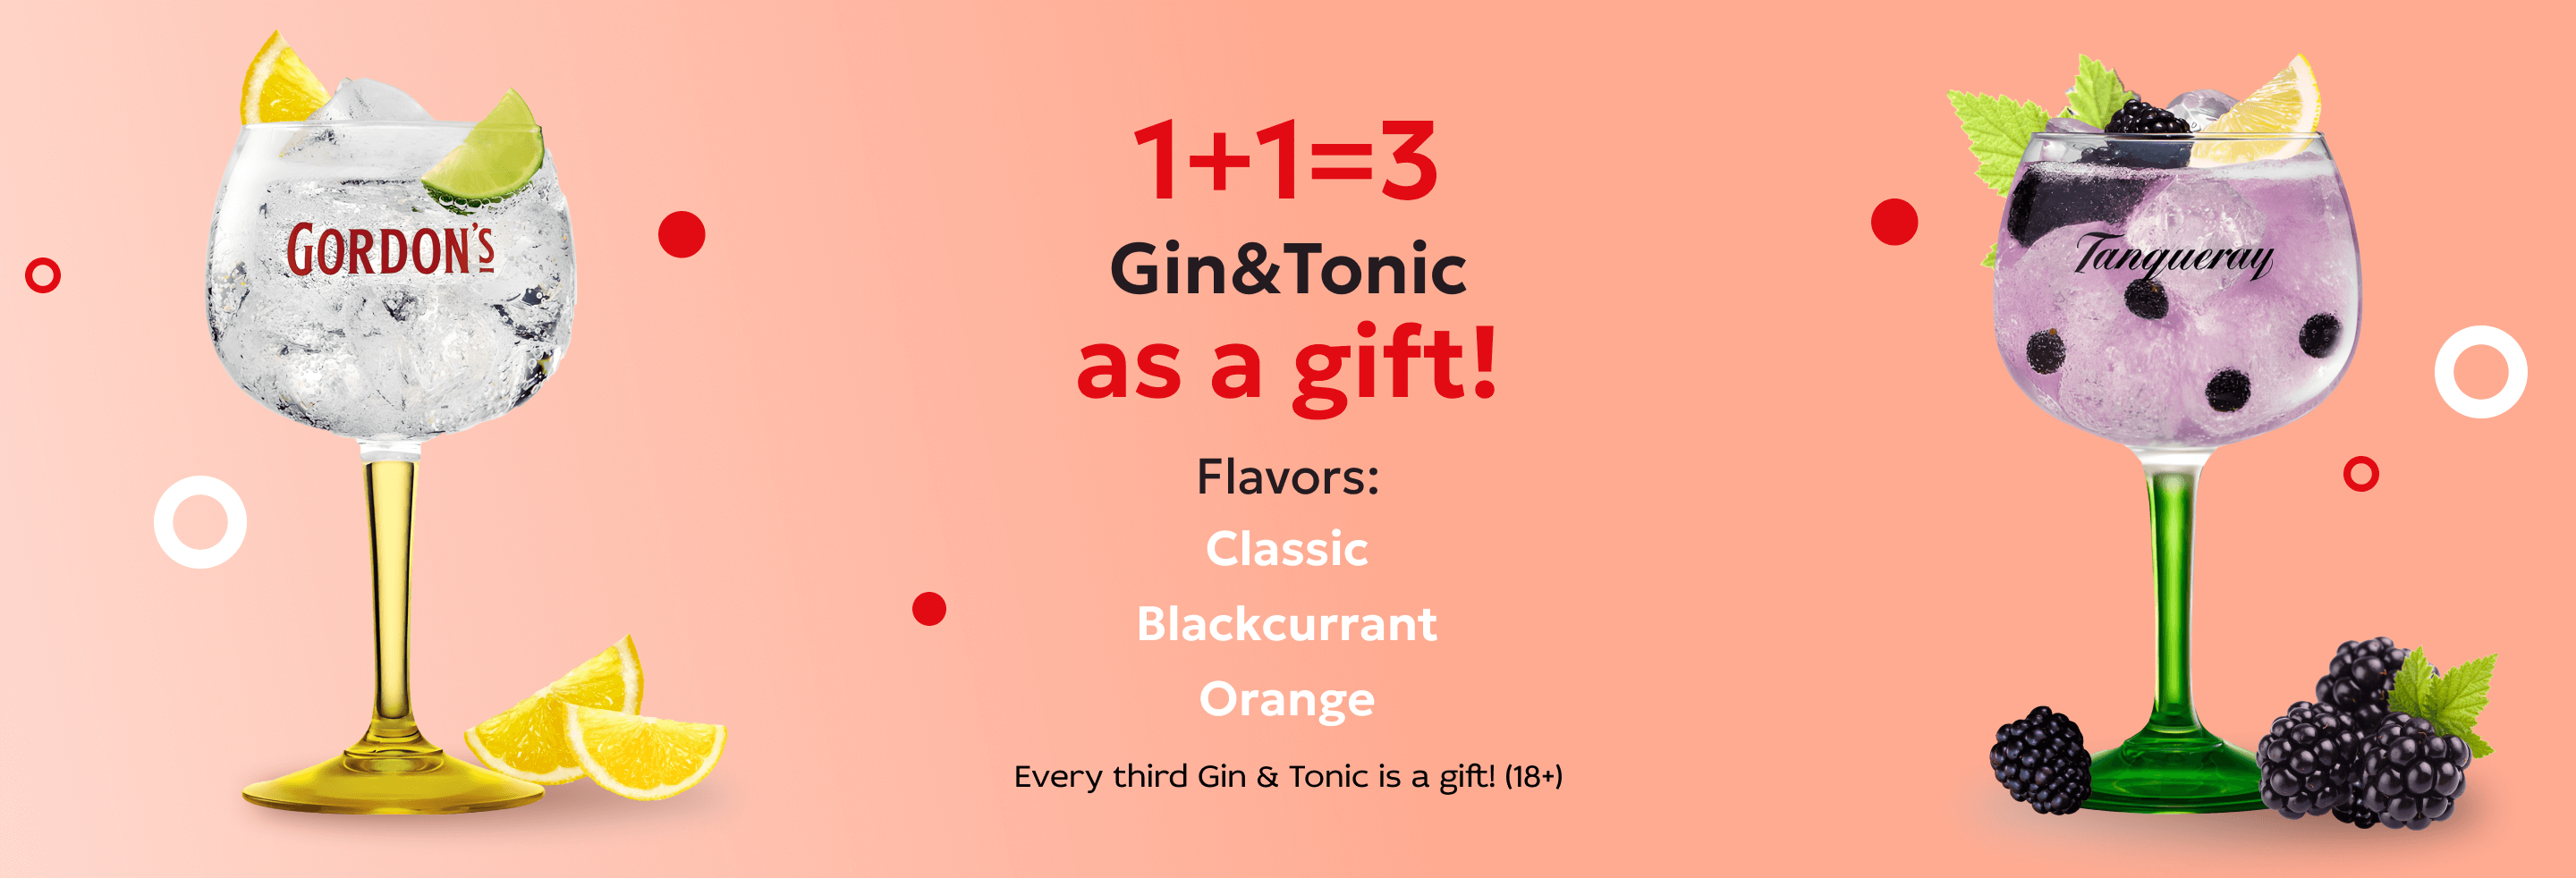 1+1=3 Gin&Tonic as a gift!